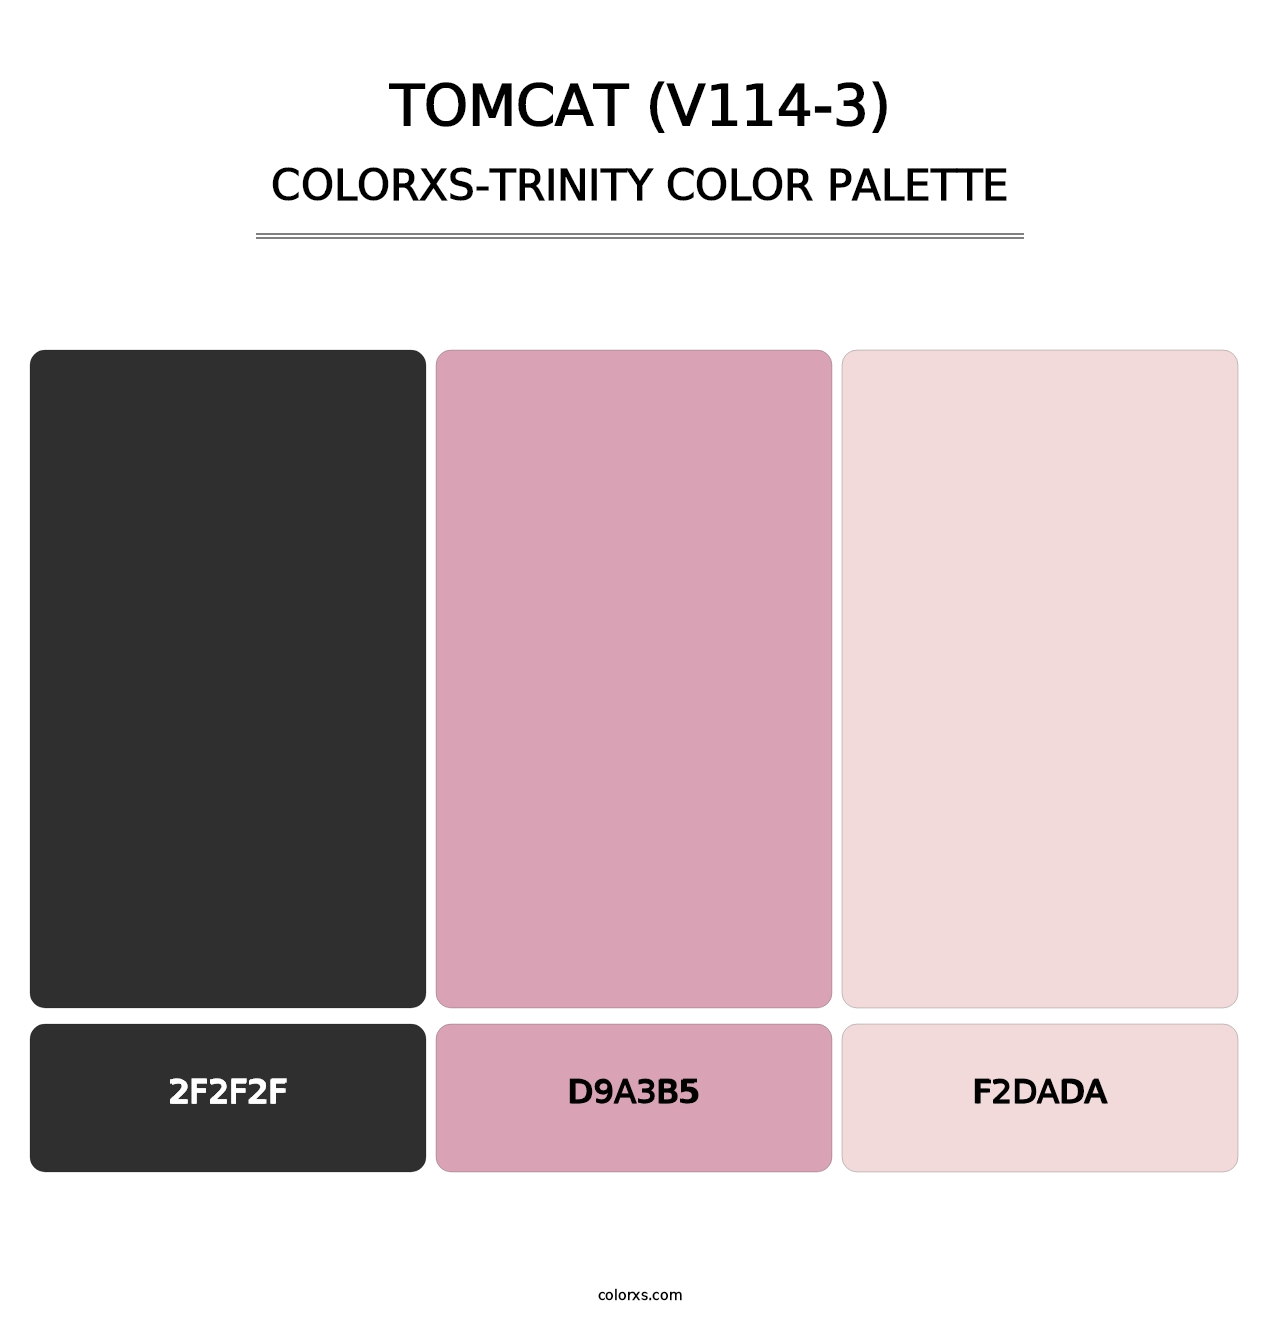 Tomcat (V114-3) - Colorxs Trinity Palette